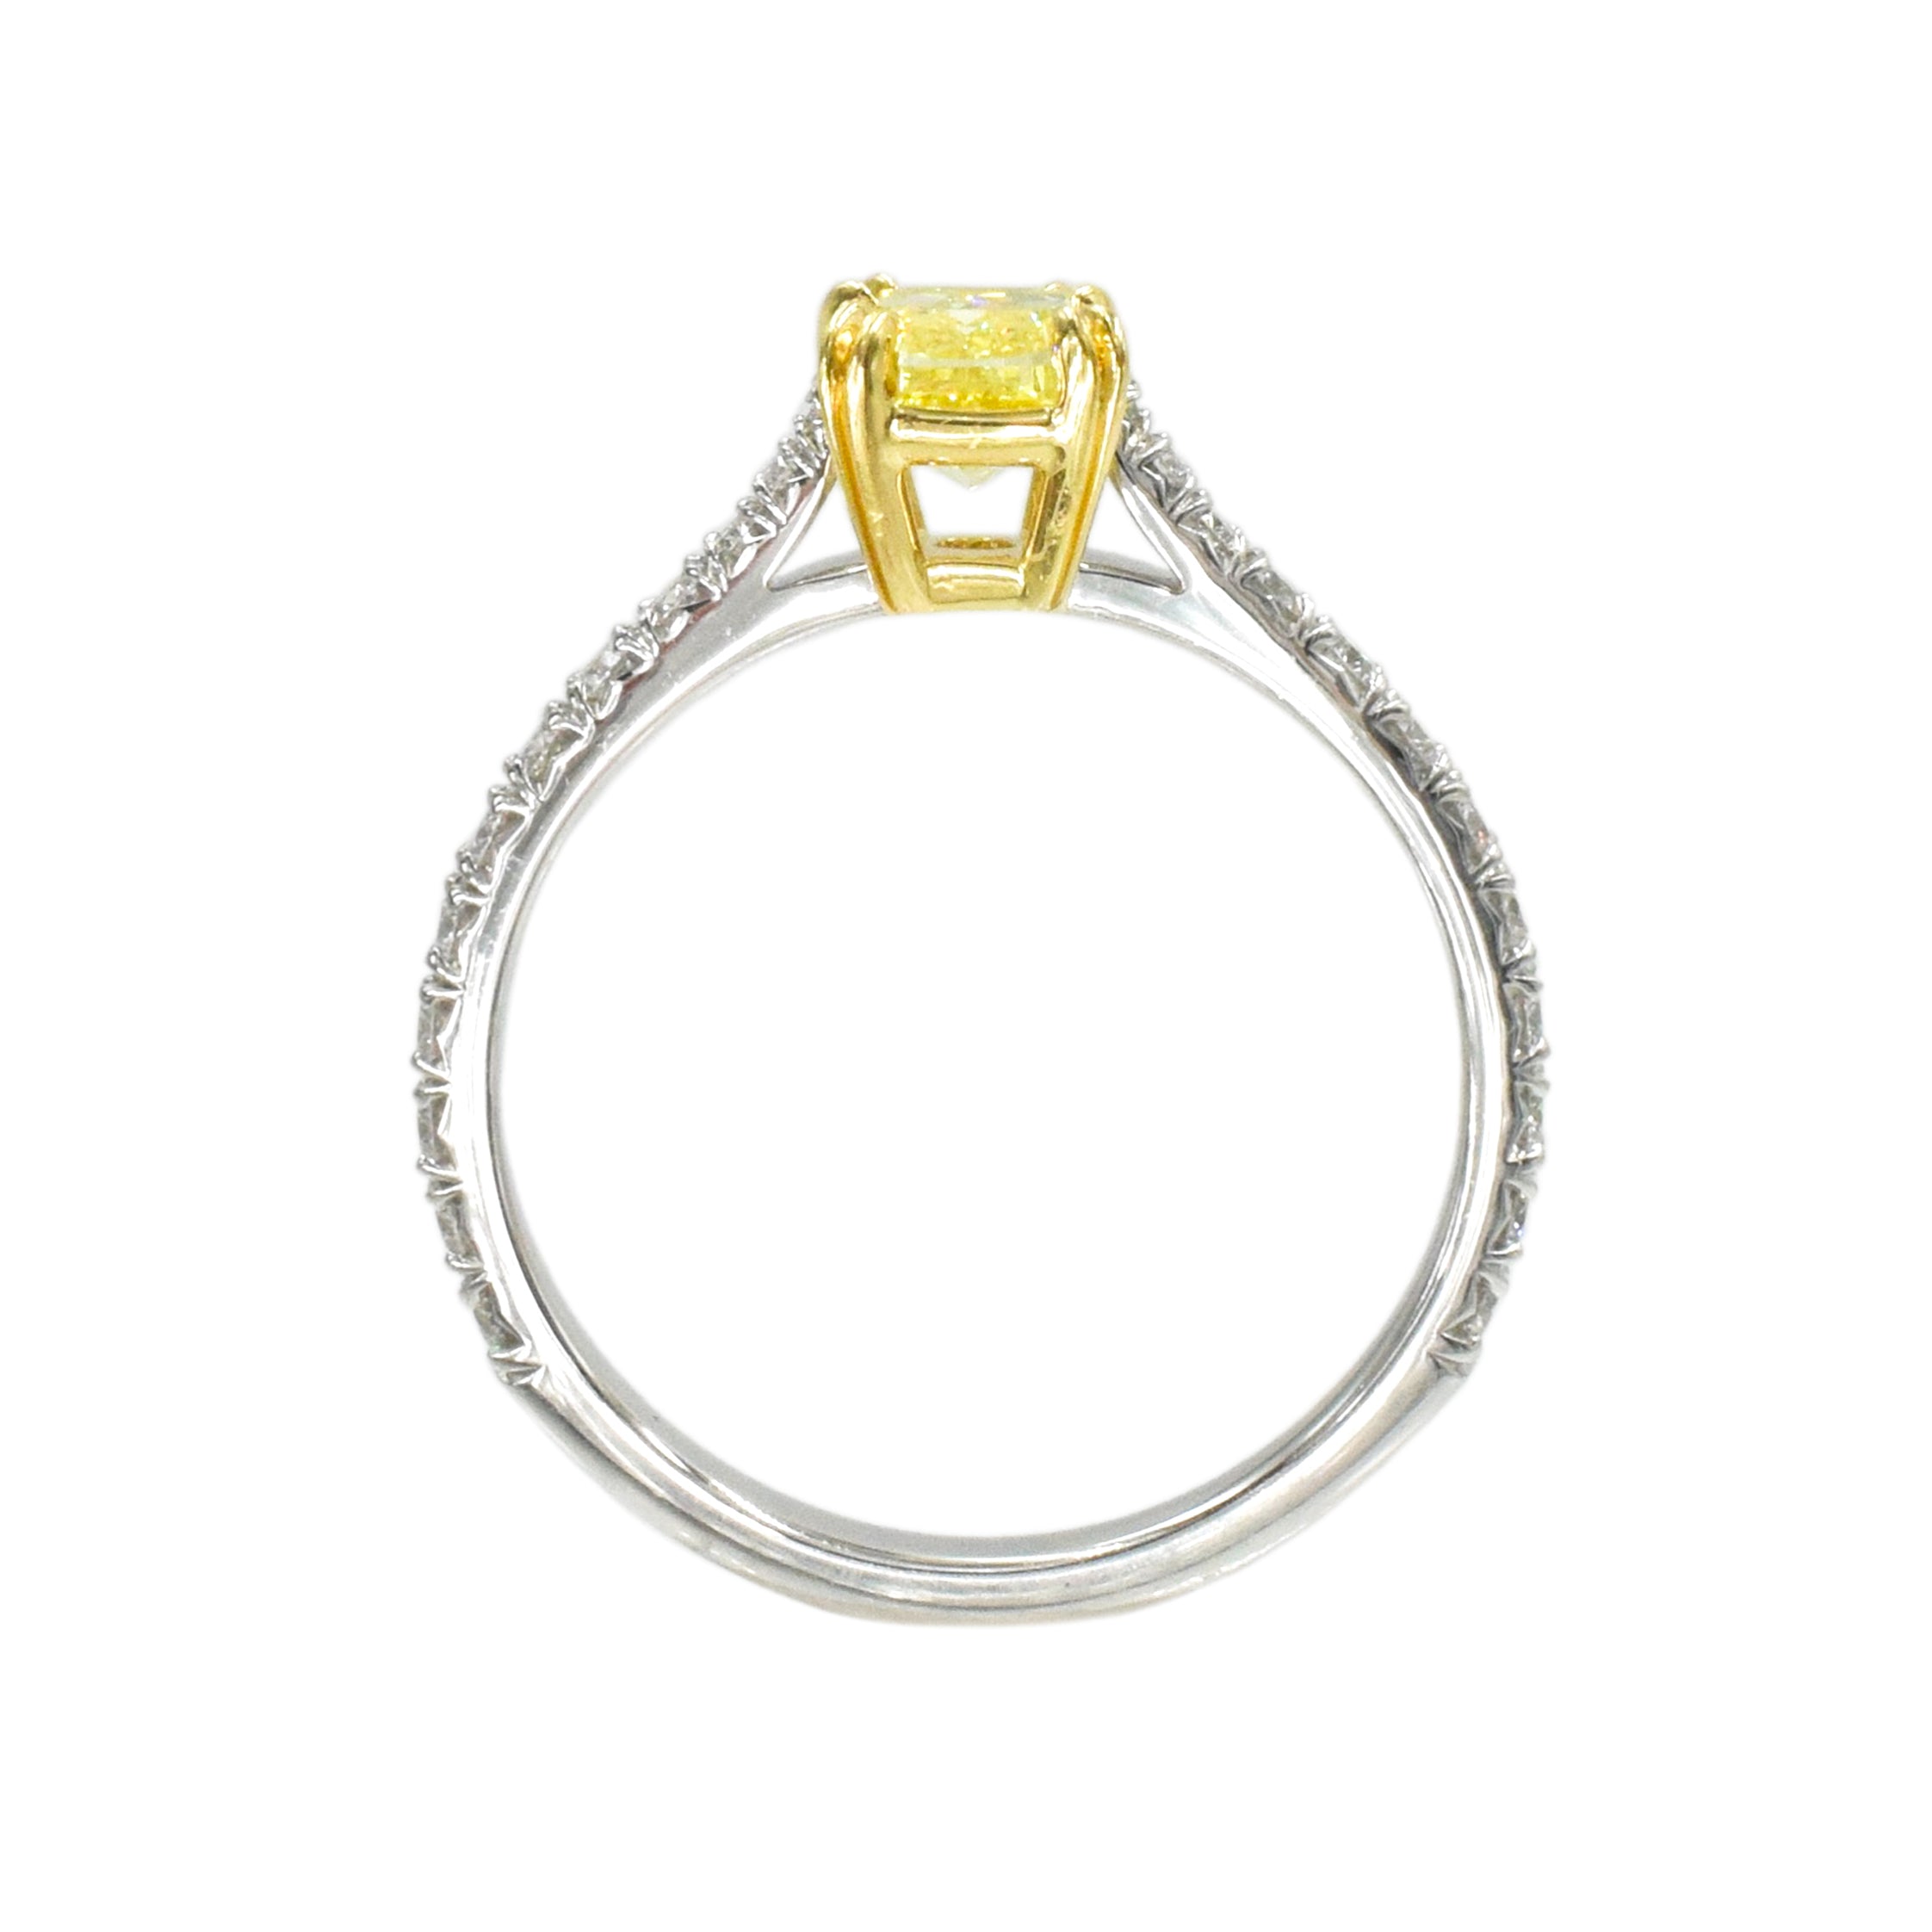 Harry Winston 1.03ct Fancy Intense Yellow Diamond Engagement Ring